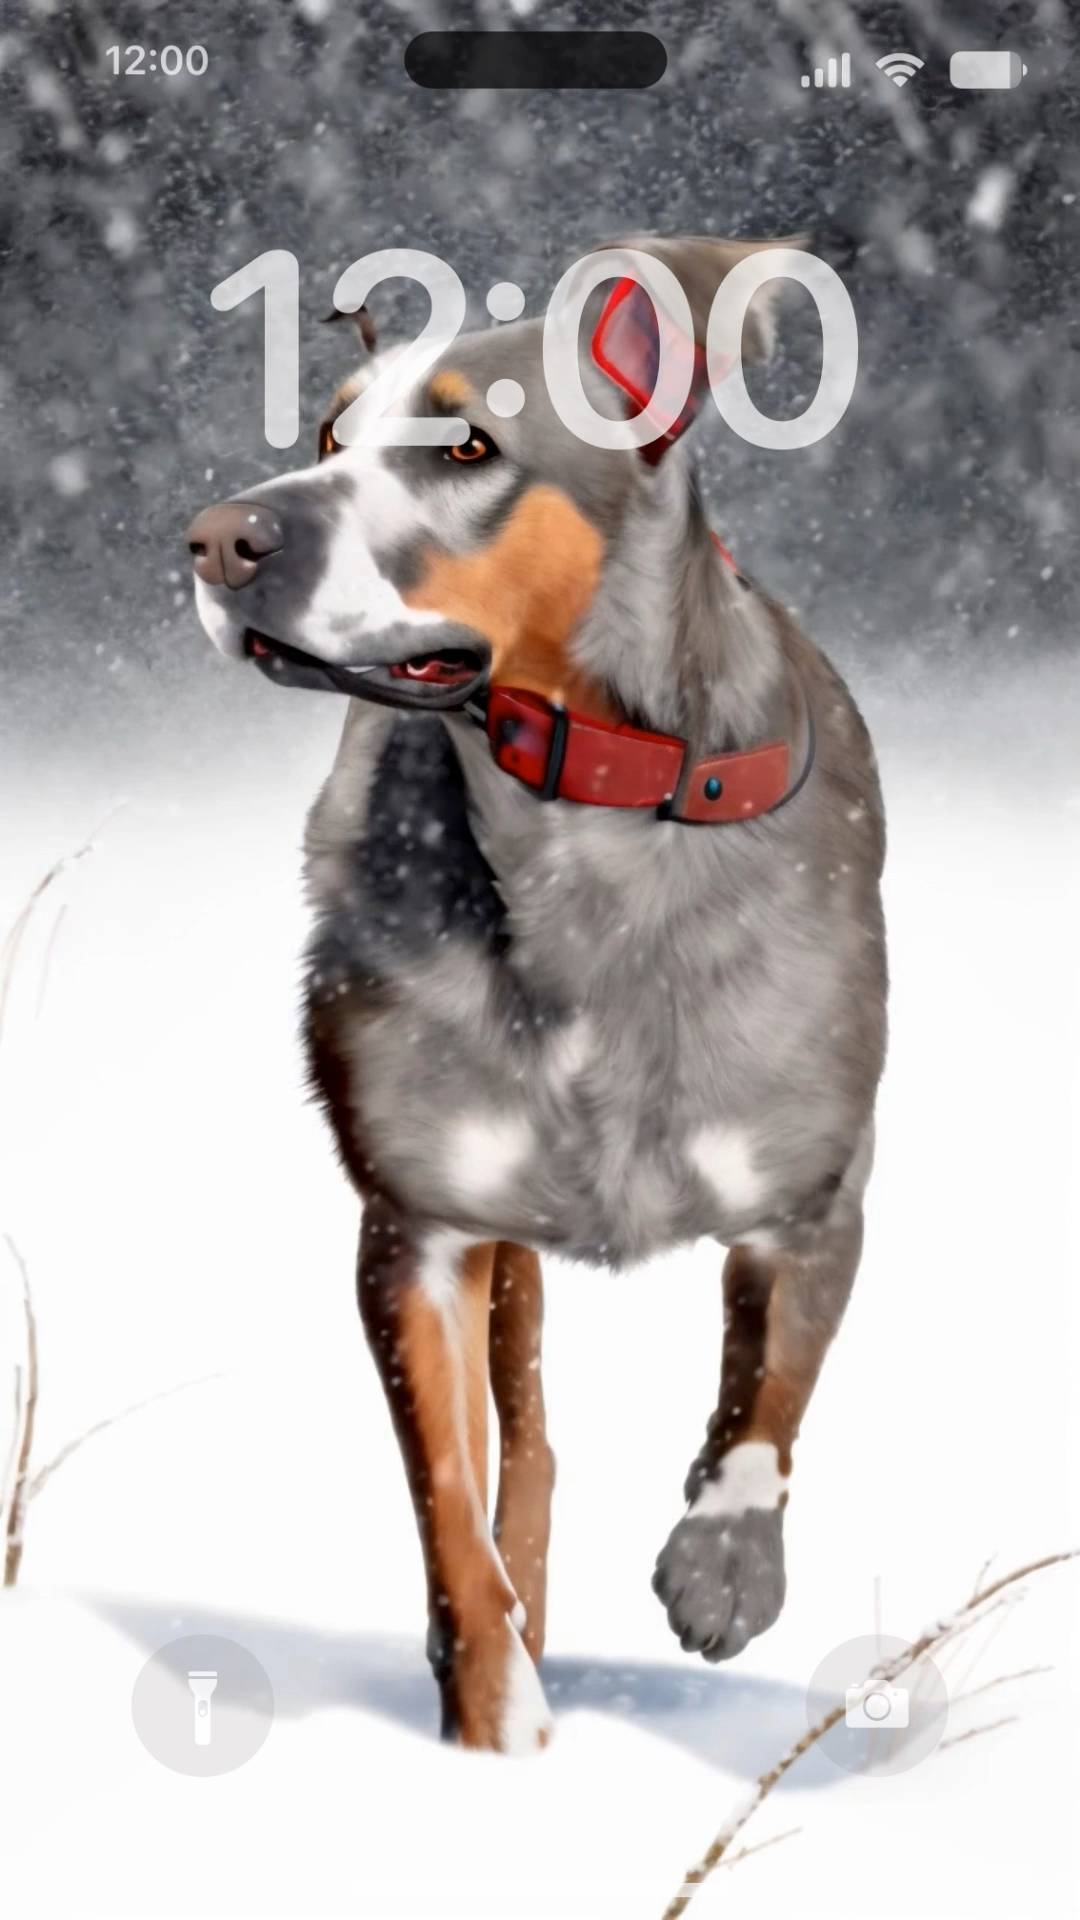 Dog in snowy day